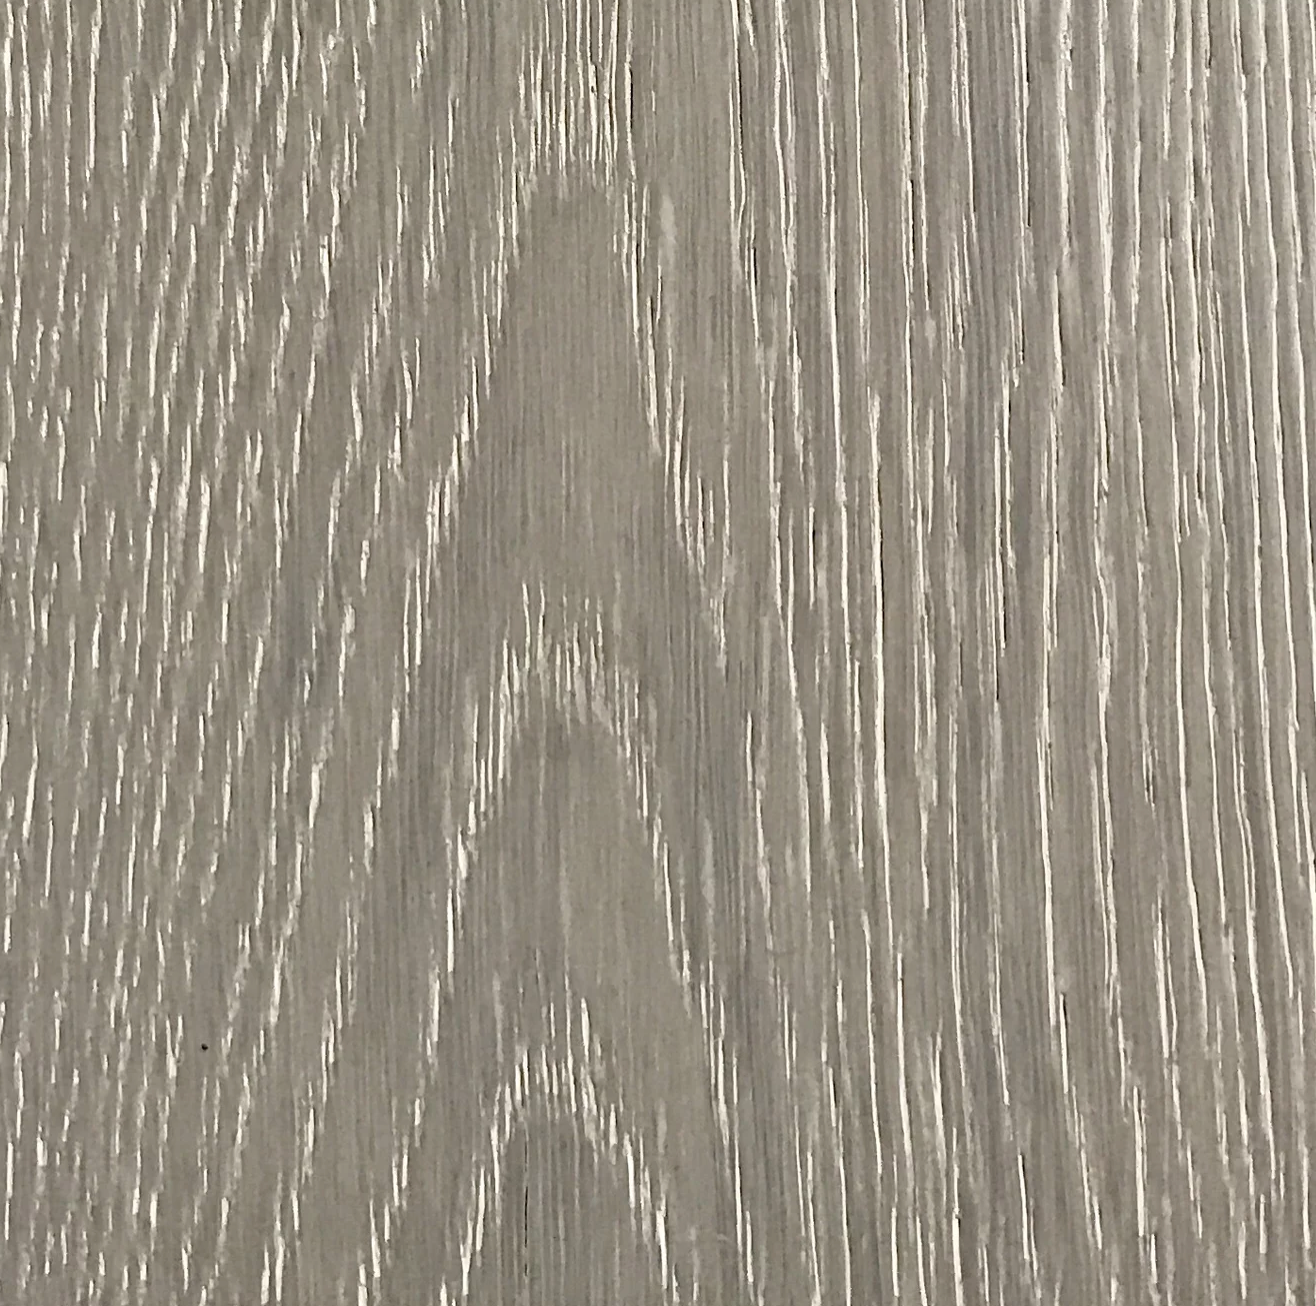 5" x 1/2" Engineered White Oak Gres Stain Hardwood Flooring